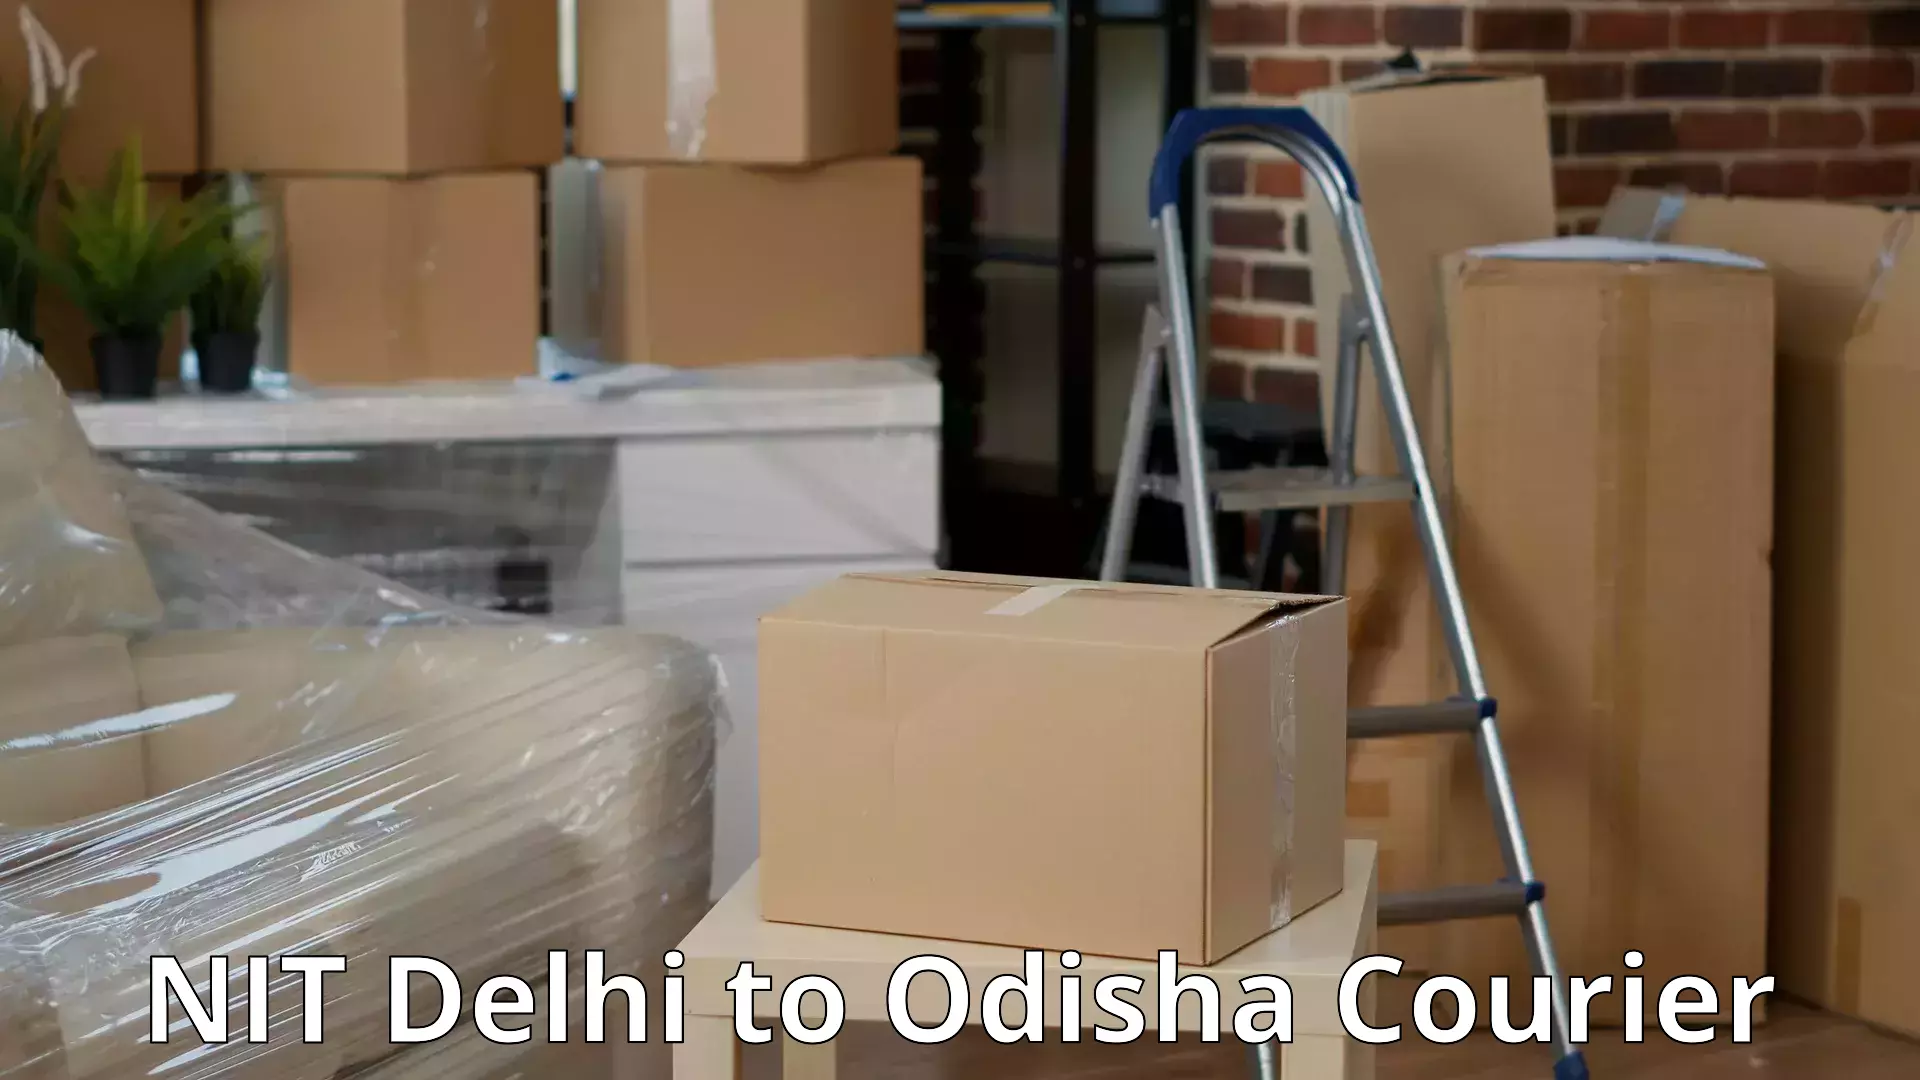 Professional moving company NIT Delhi to Balinga